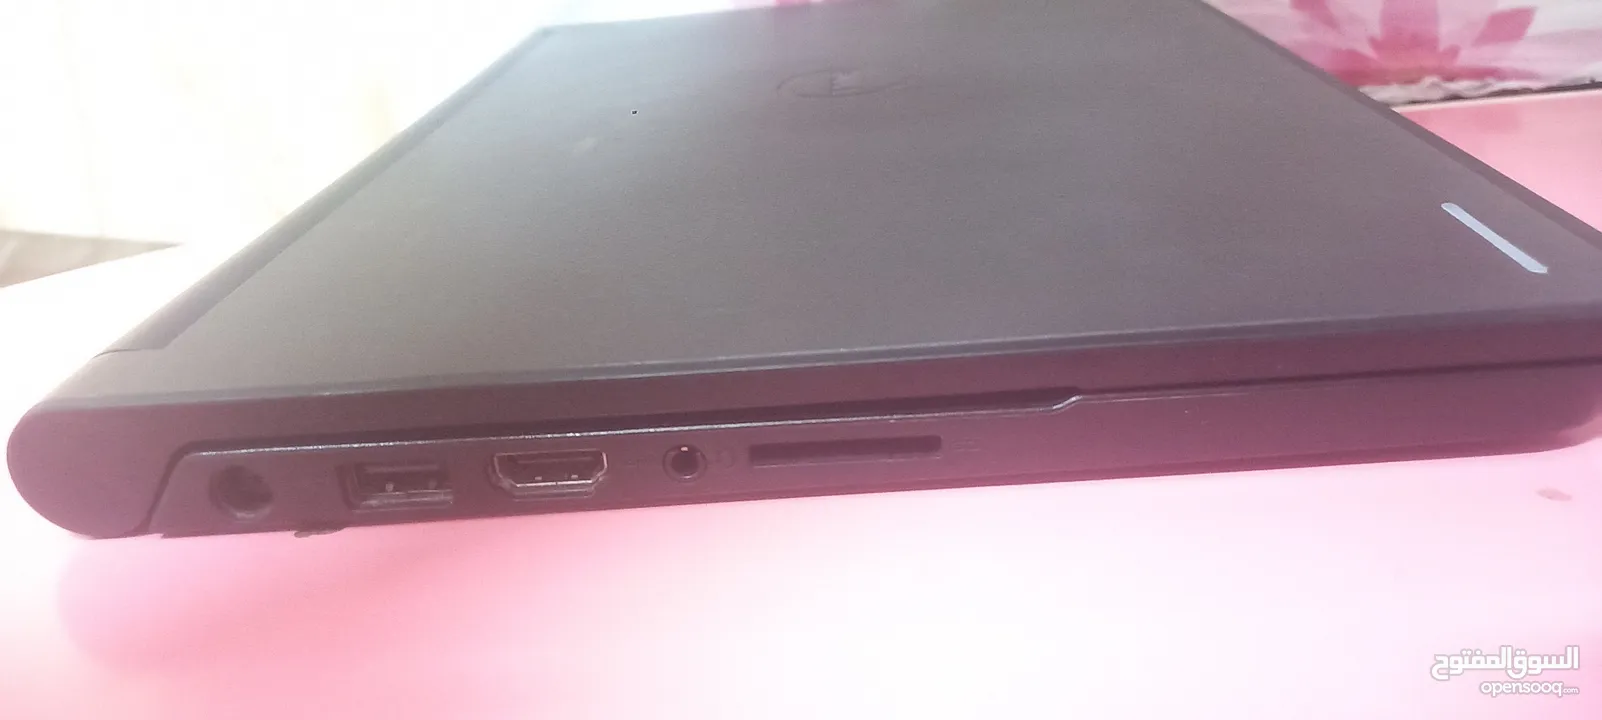 Dell chromebook 11 laptop